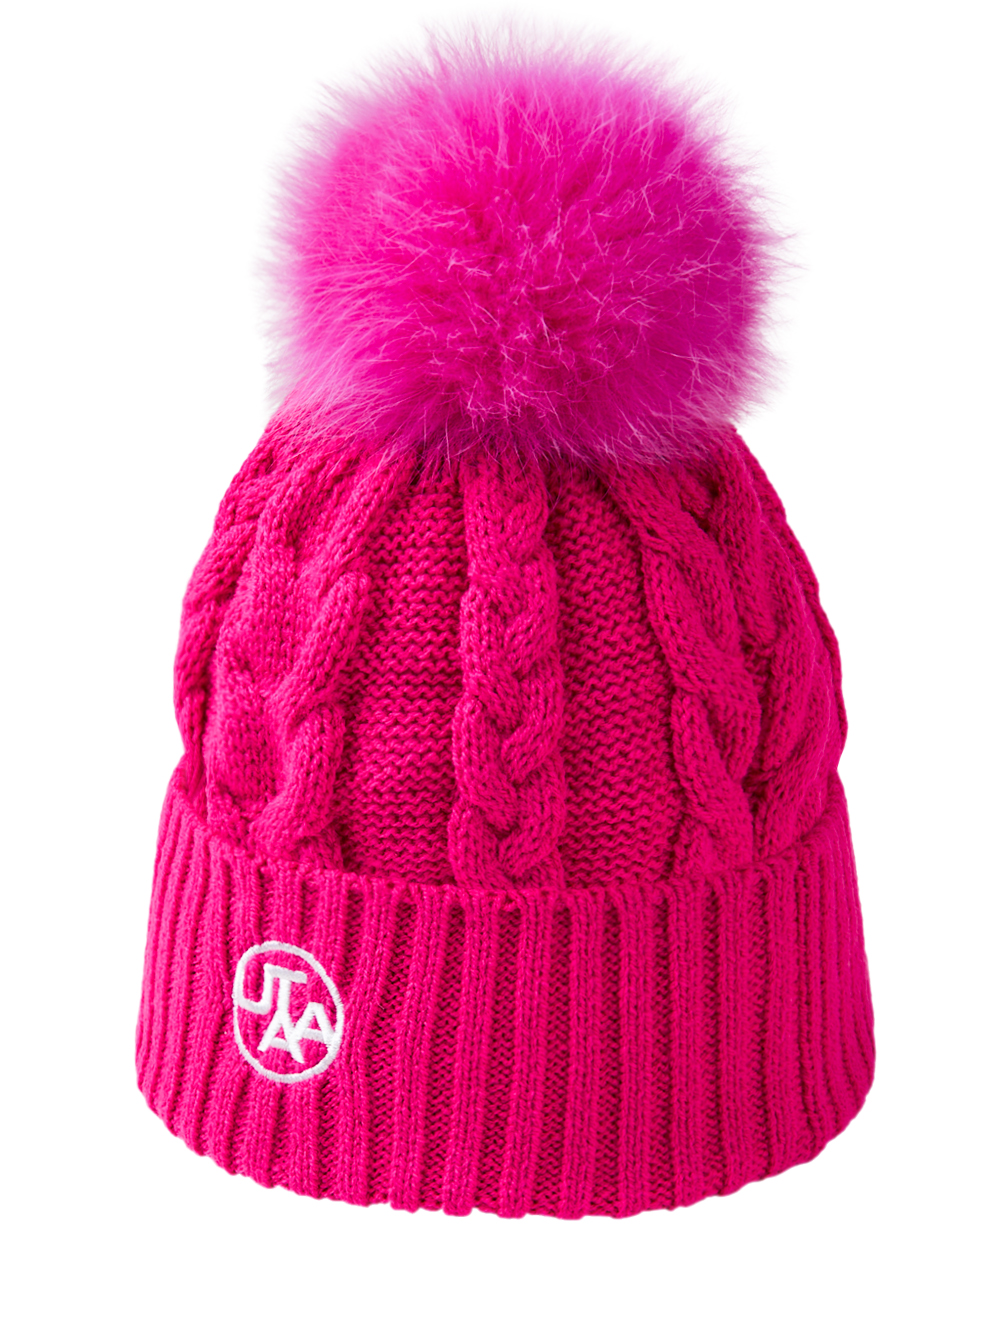 UTAA Fancy Color Knit Ball Beanie : Pink(UD1GCF753PK)